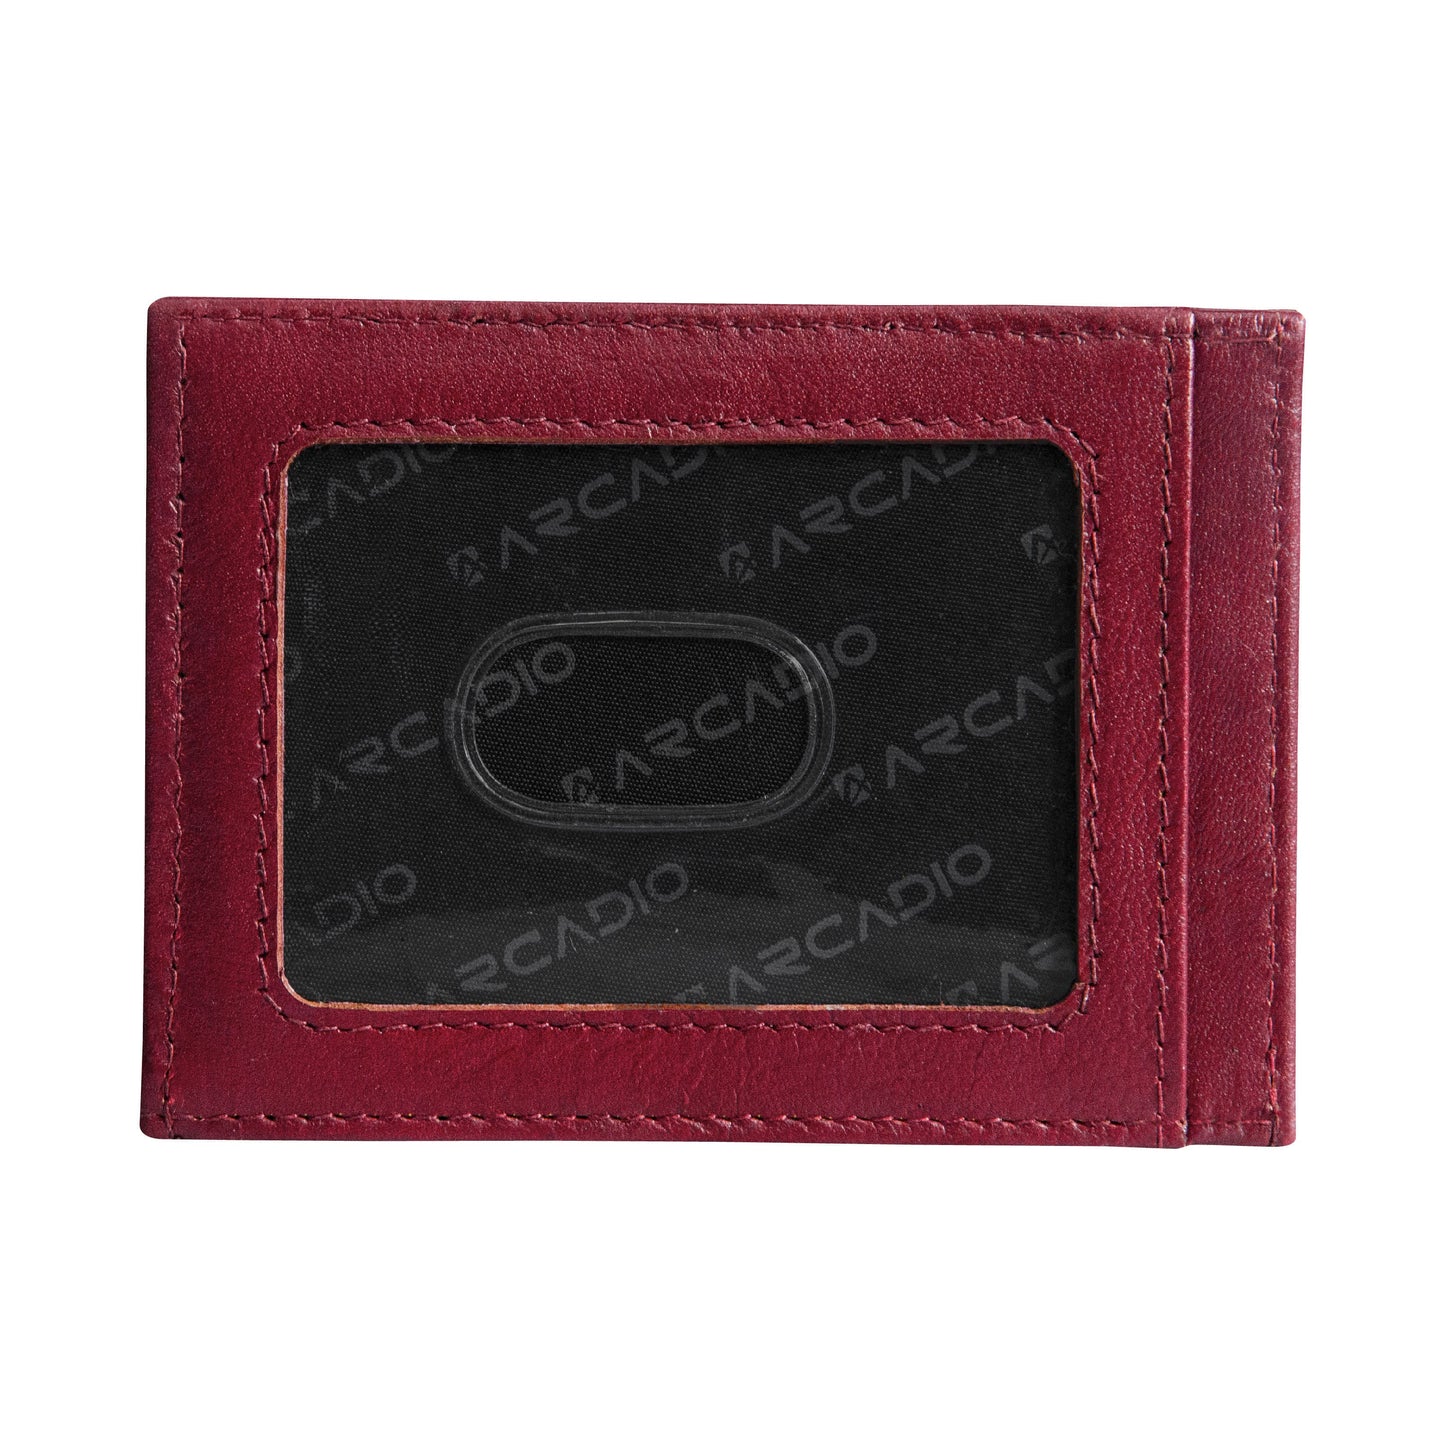 SLIM TRIM Magnetic Leather Card Holder ARWMC1013MR ARCADIO